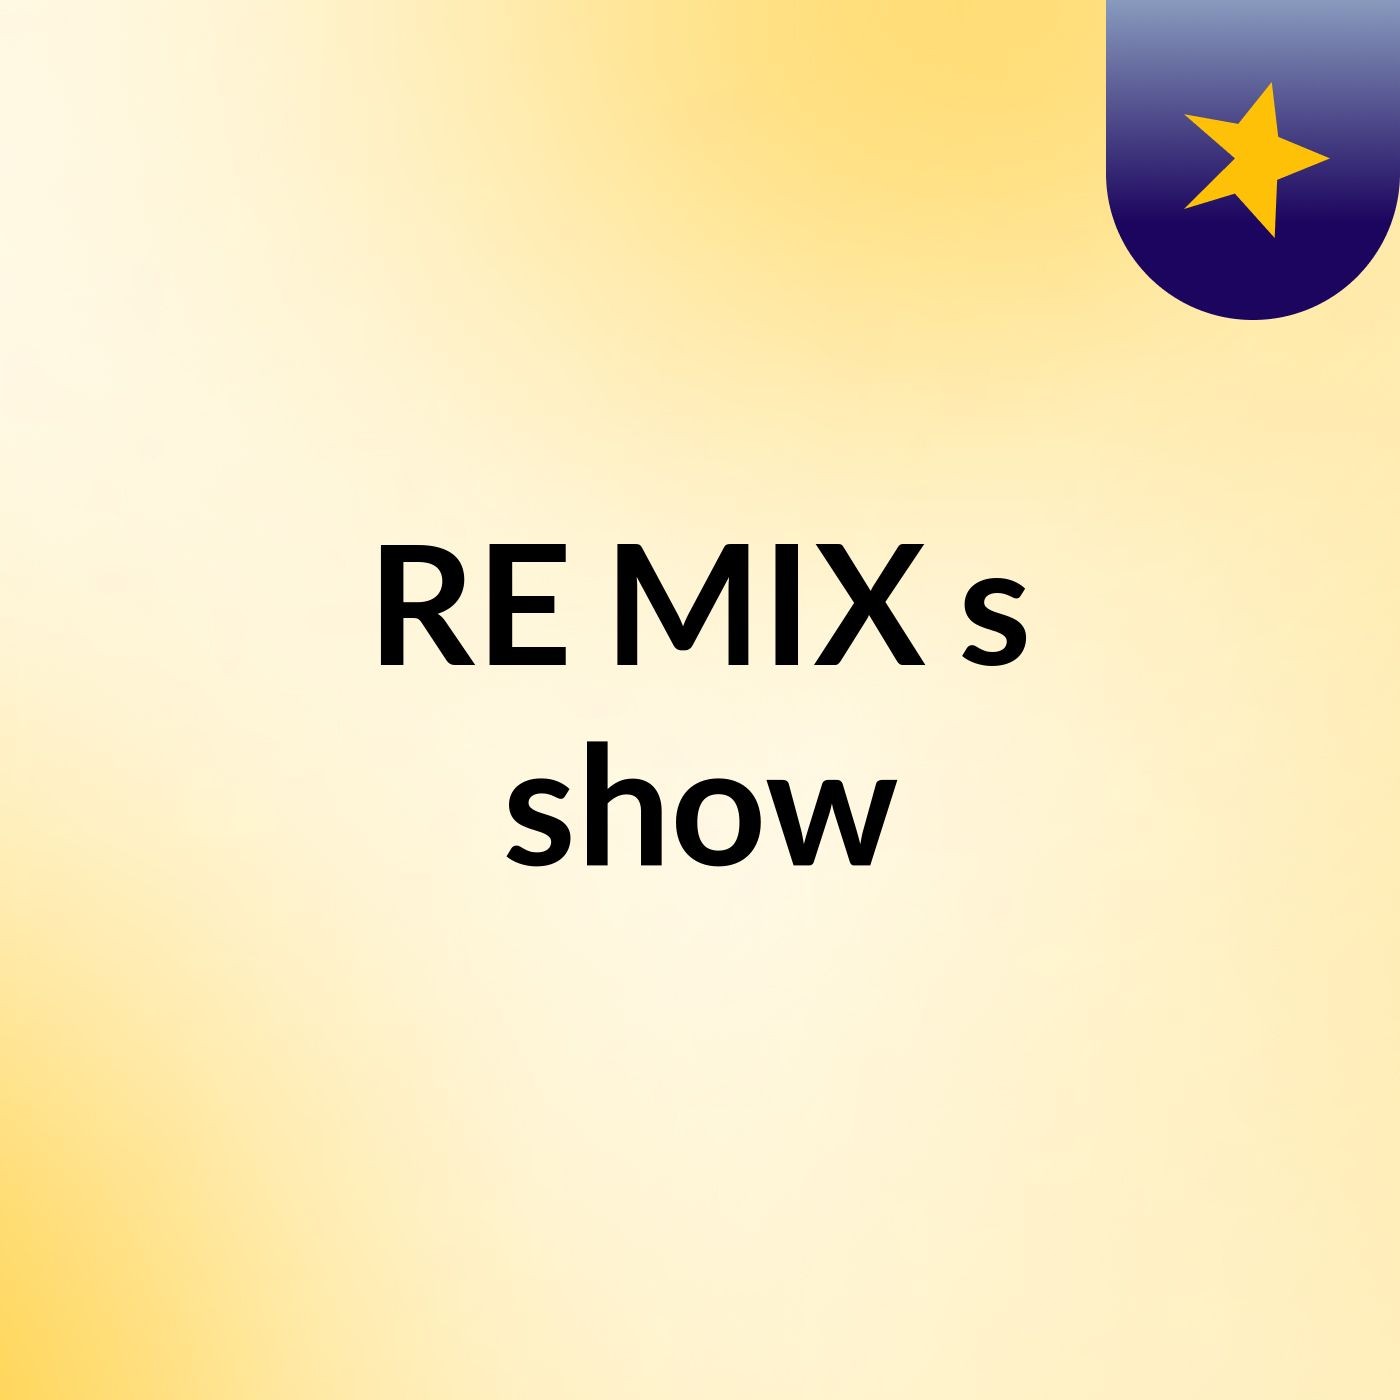 RE MIX's show